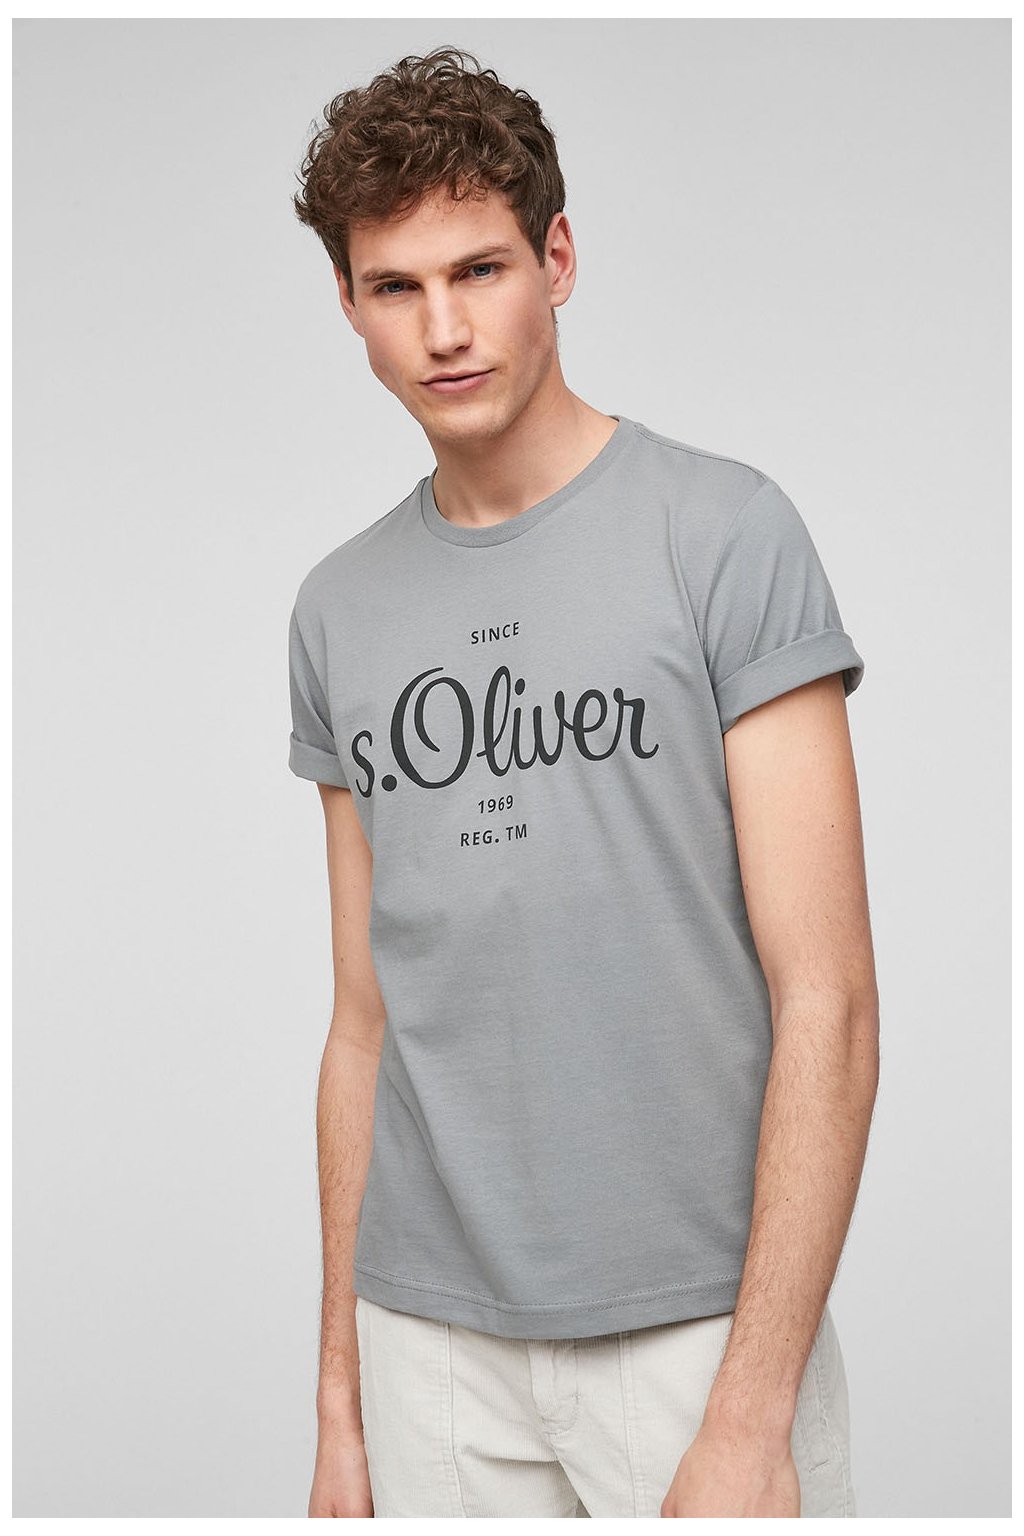 Pánske tričko s.OLIVER 2057432 9500